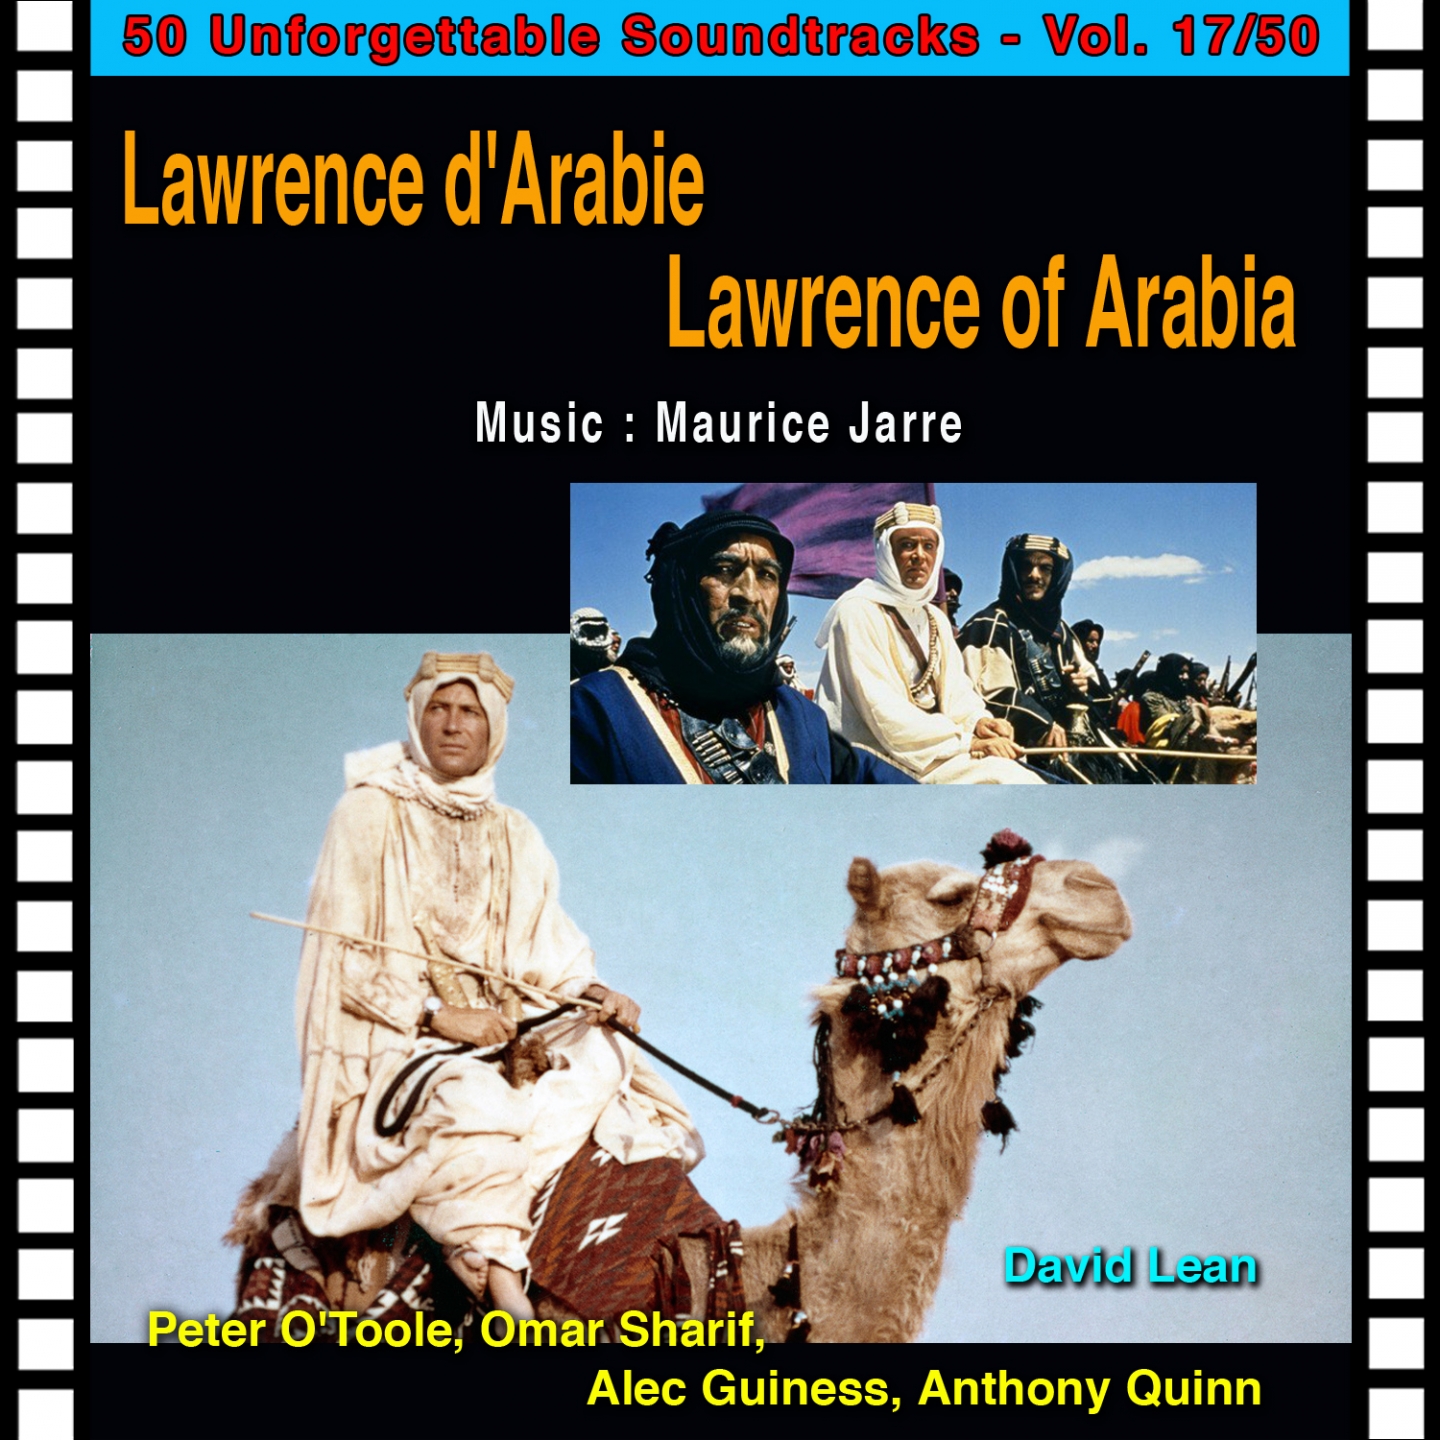 Lawrence of Arabia: Nefud Miracle (Maurice Jarre)